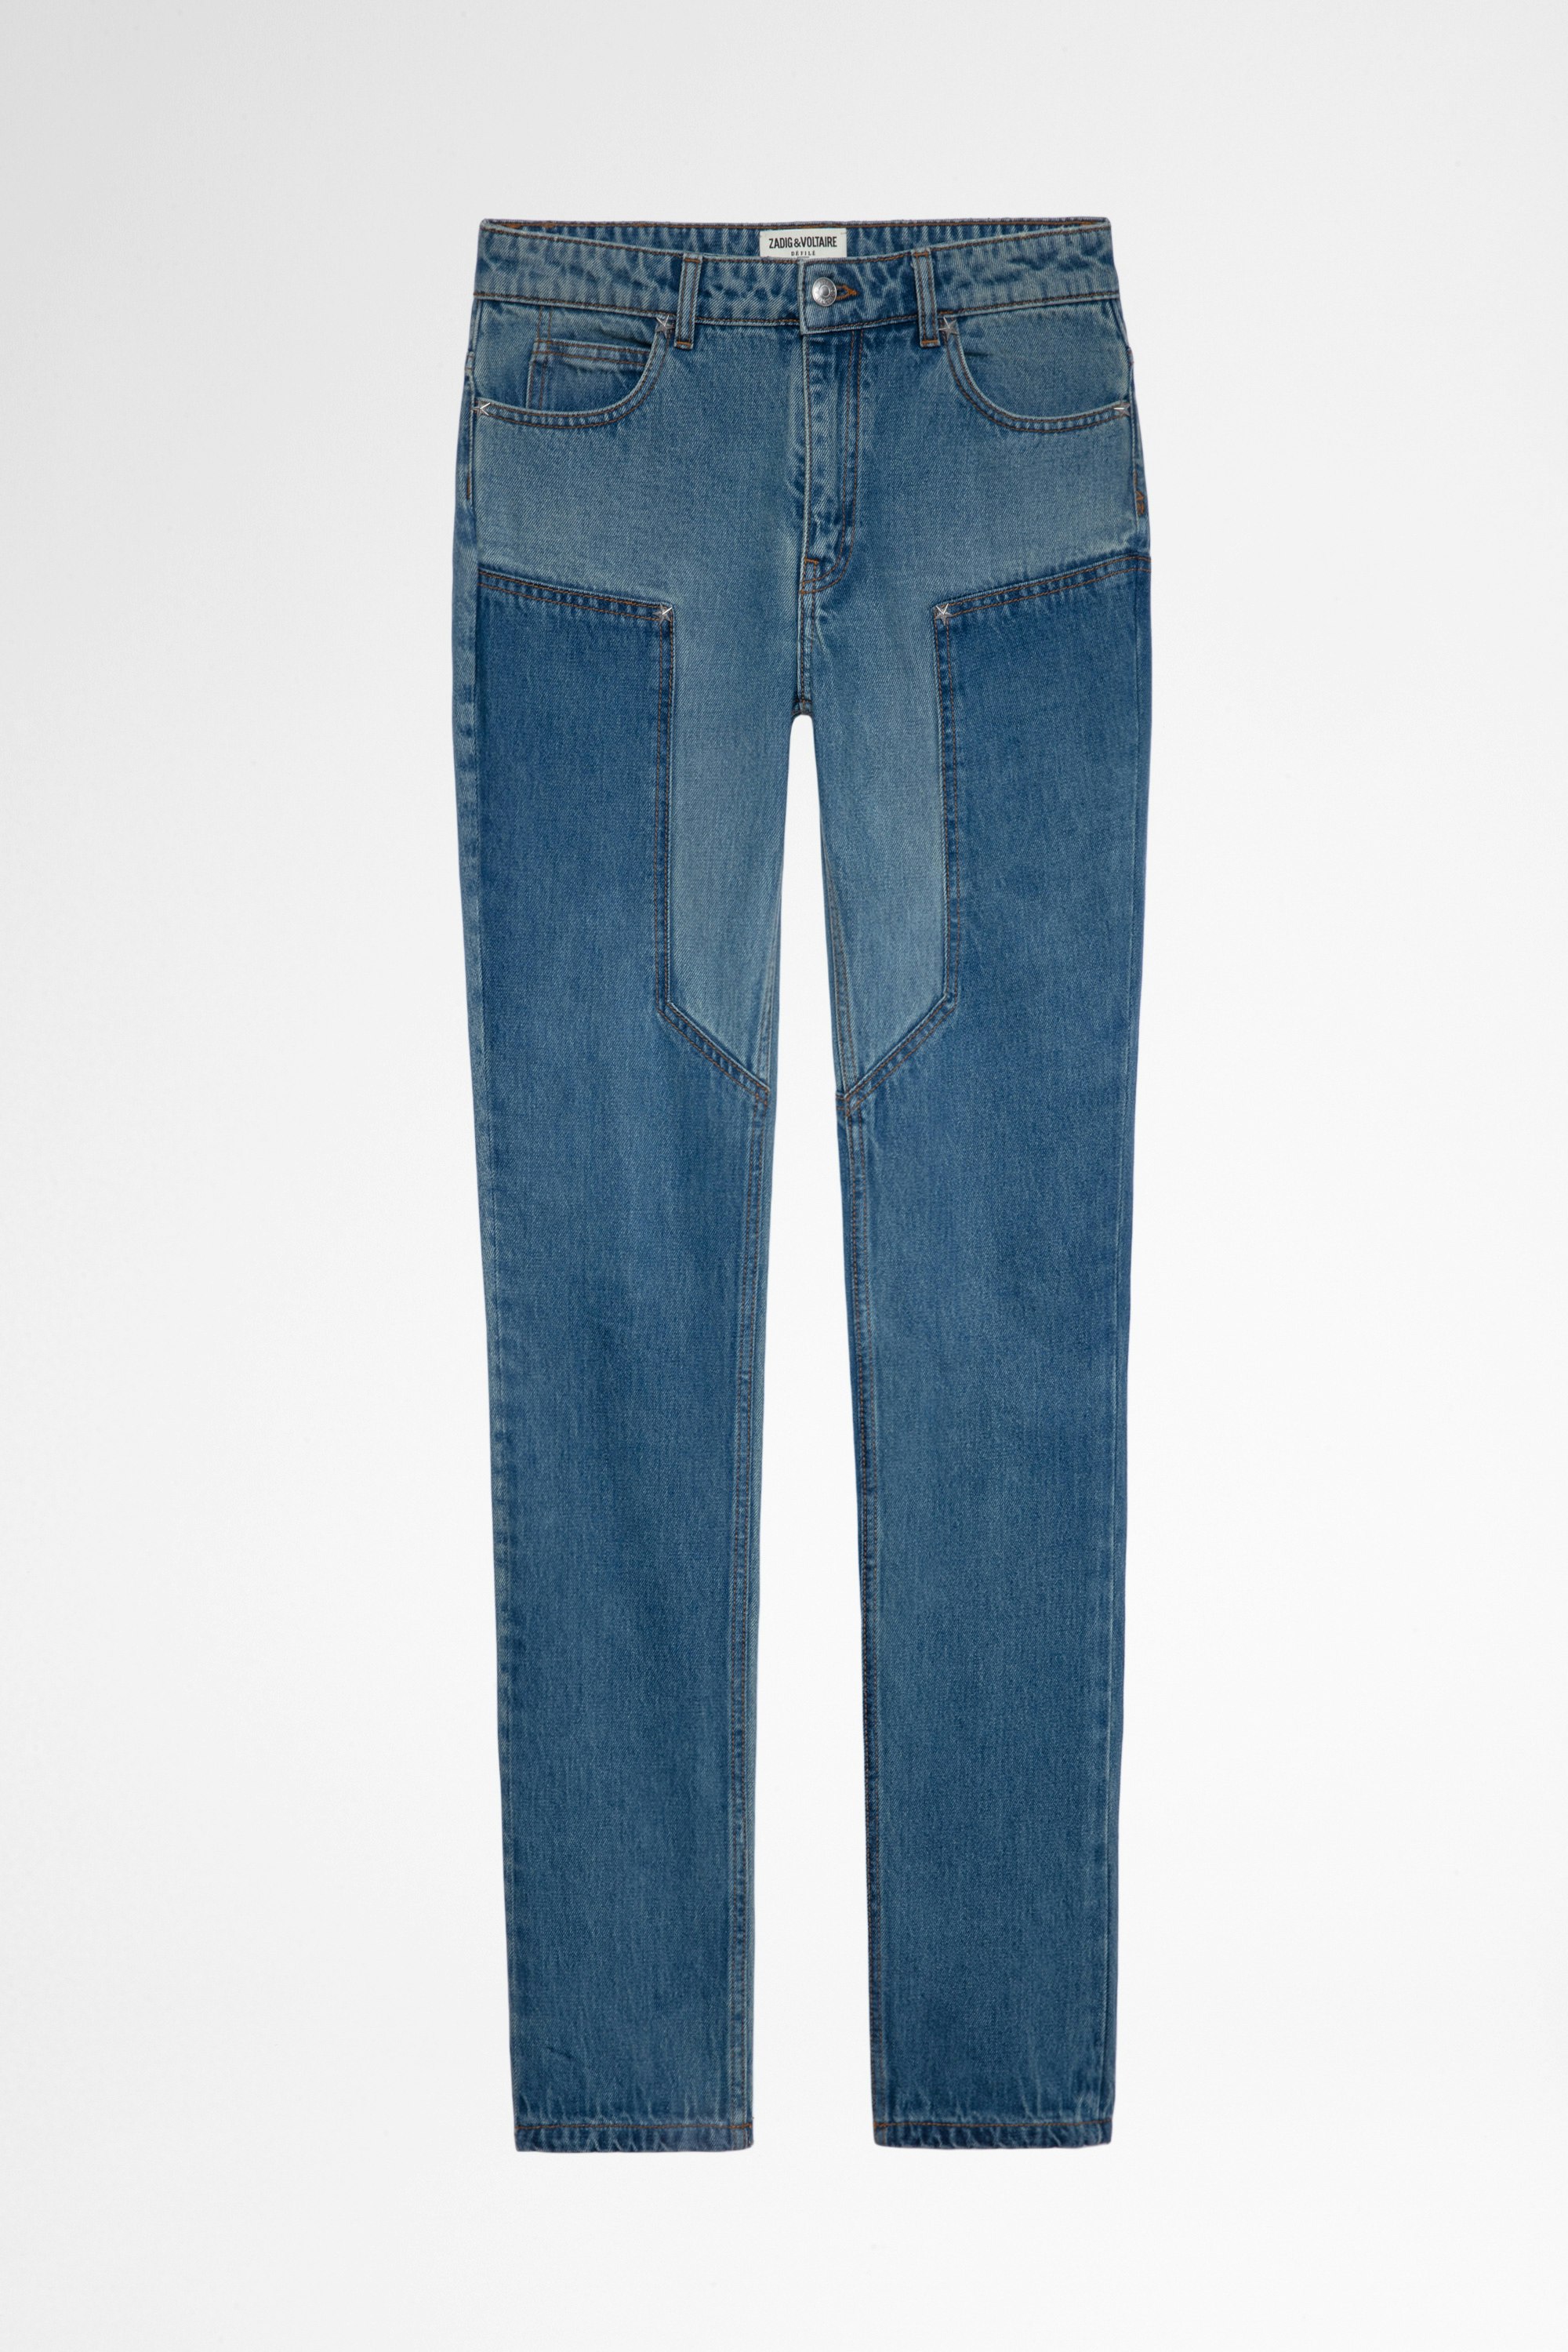 Elea Jeans Women's light and dark blue denim jeans